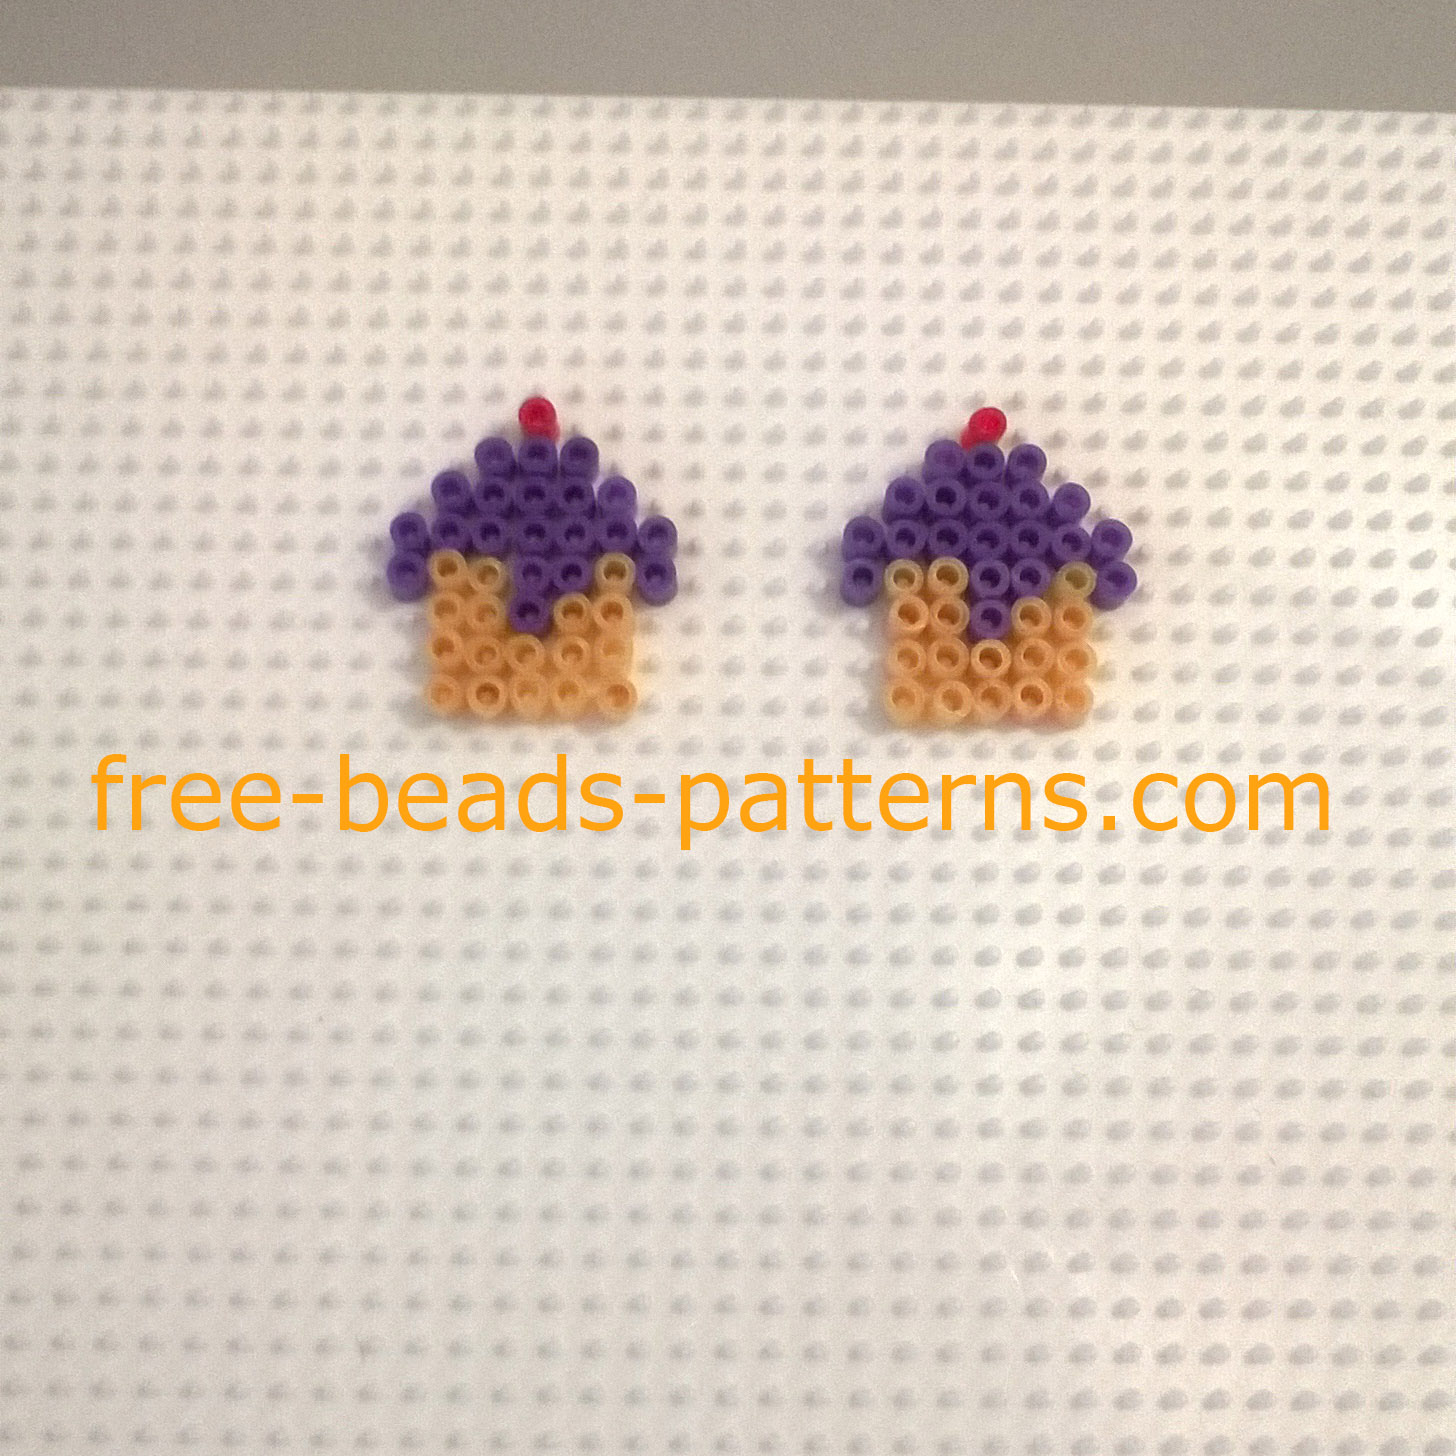 Work in progress photos perler beads earrings with cupcakes (2)